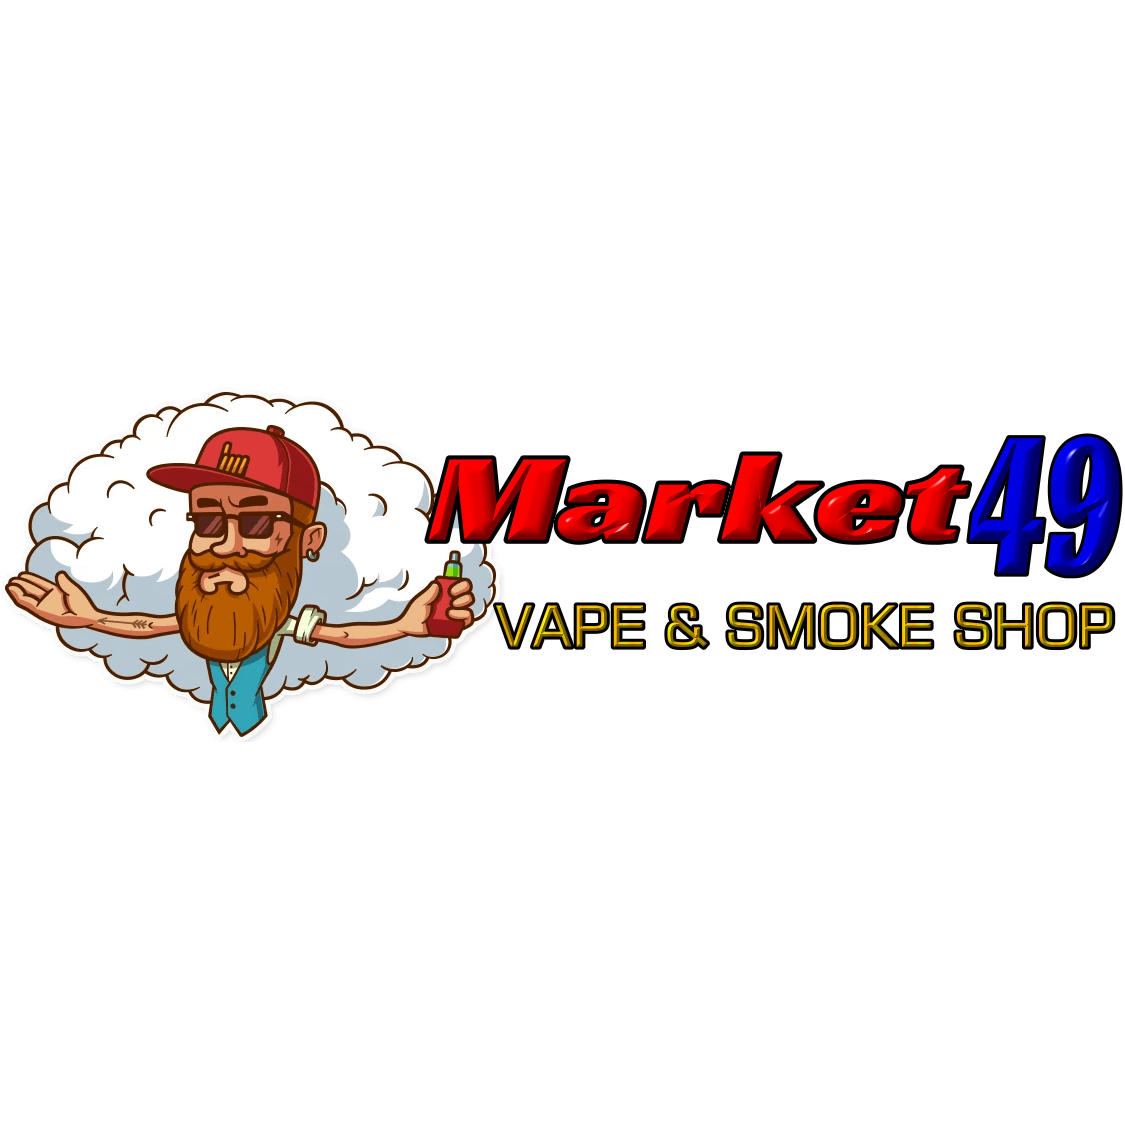 Market 49 Vape and Smoke Shop - Hialeah Logo